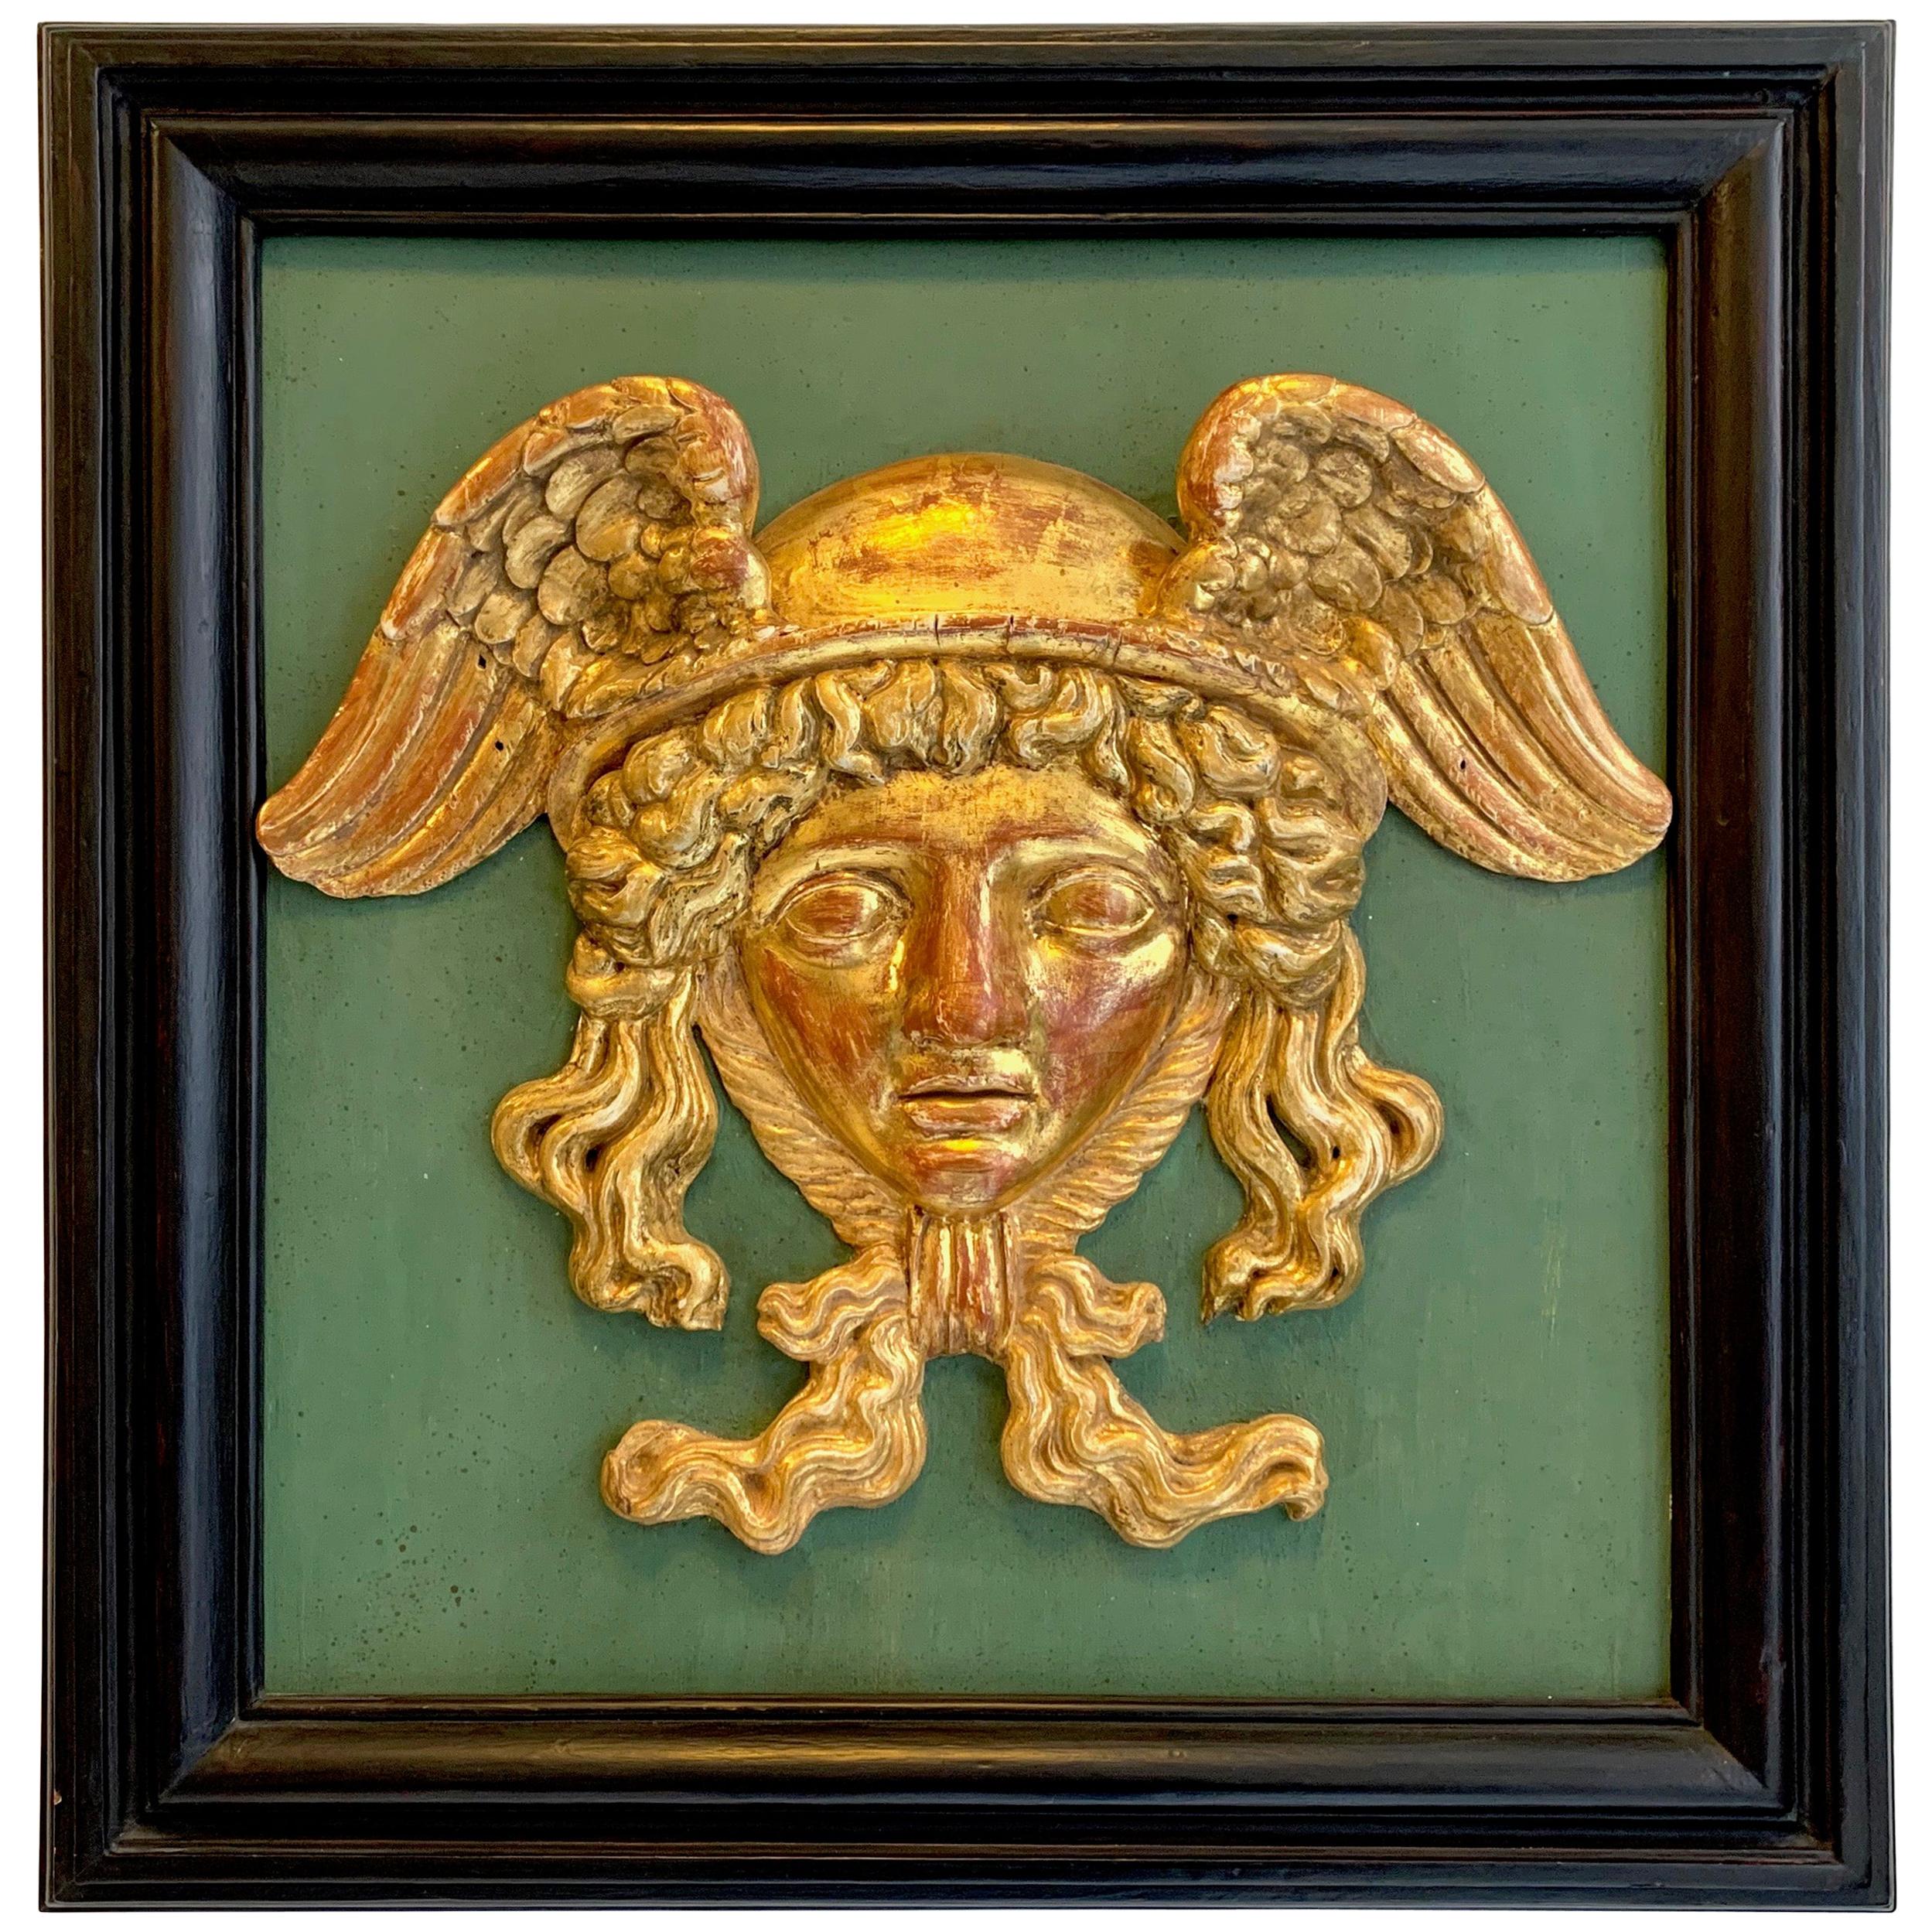 Antique Empire Head of Hermes Carved Wood Messenger of Zeus God of Merchants